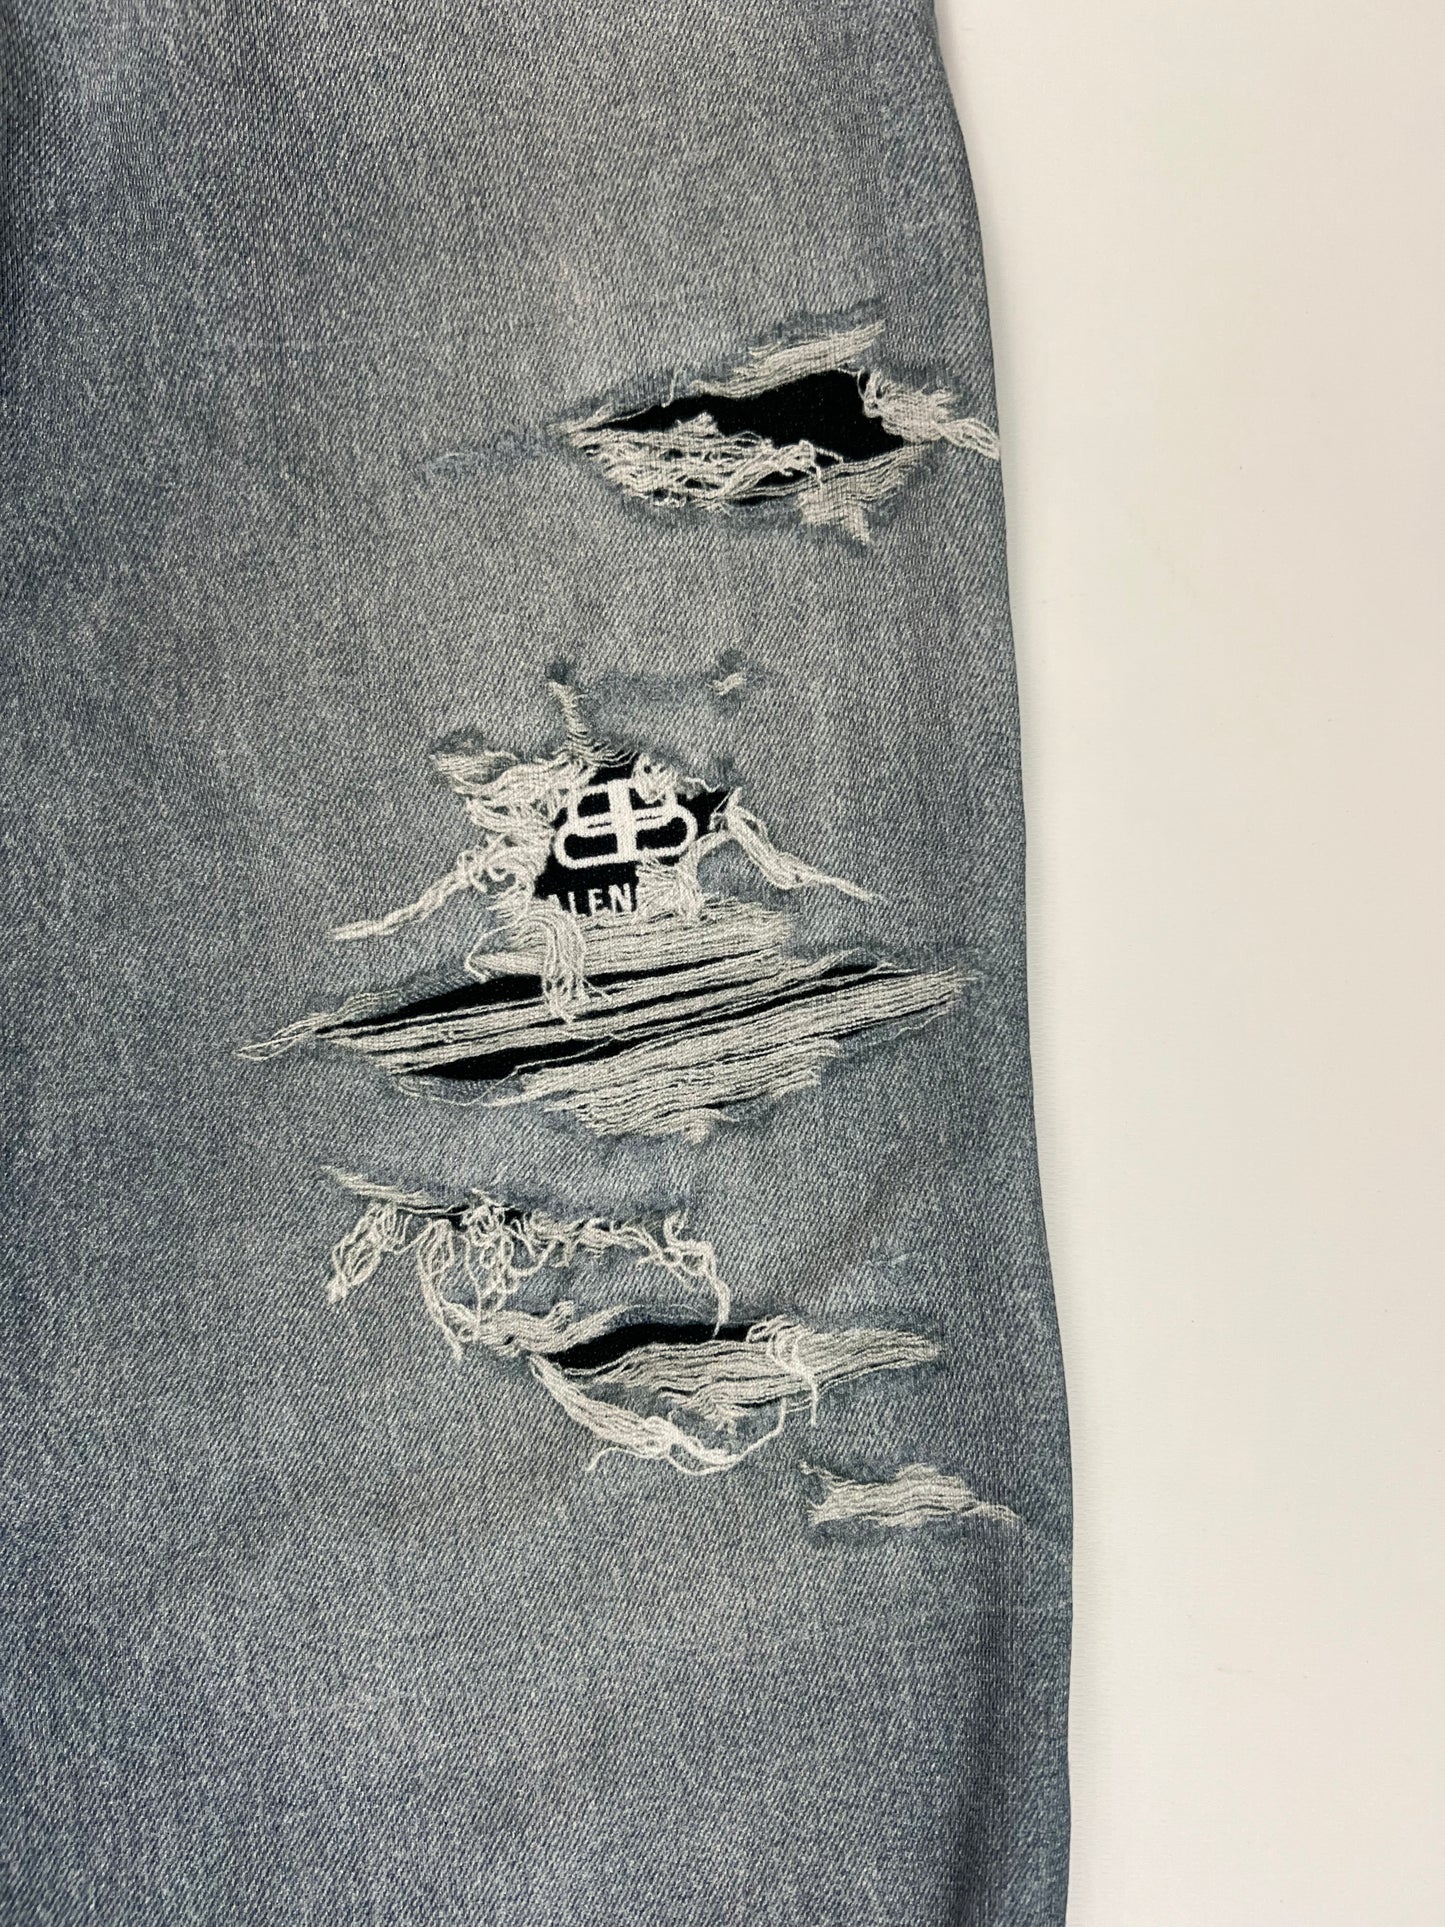 Balenciaga trompe l’oeil ripped jeans sweatpants Jogger SZ:S